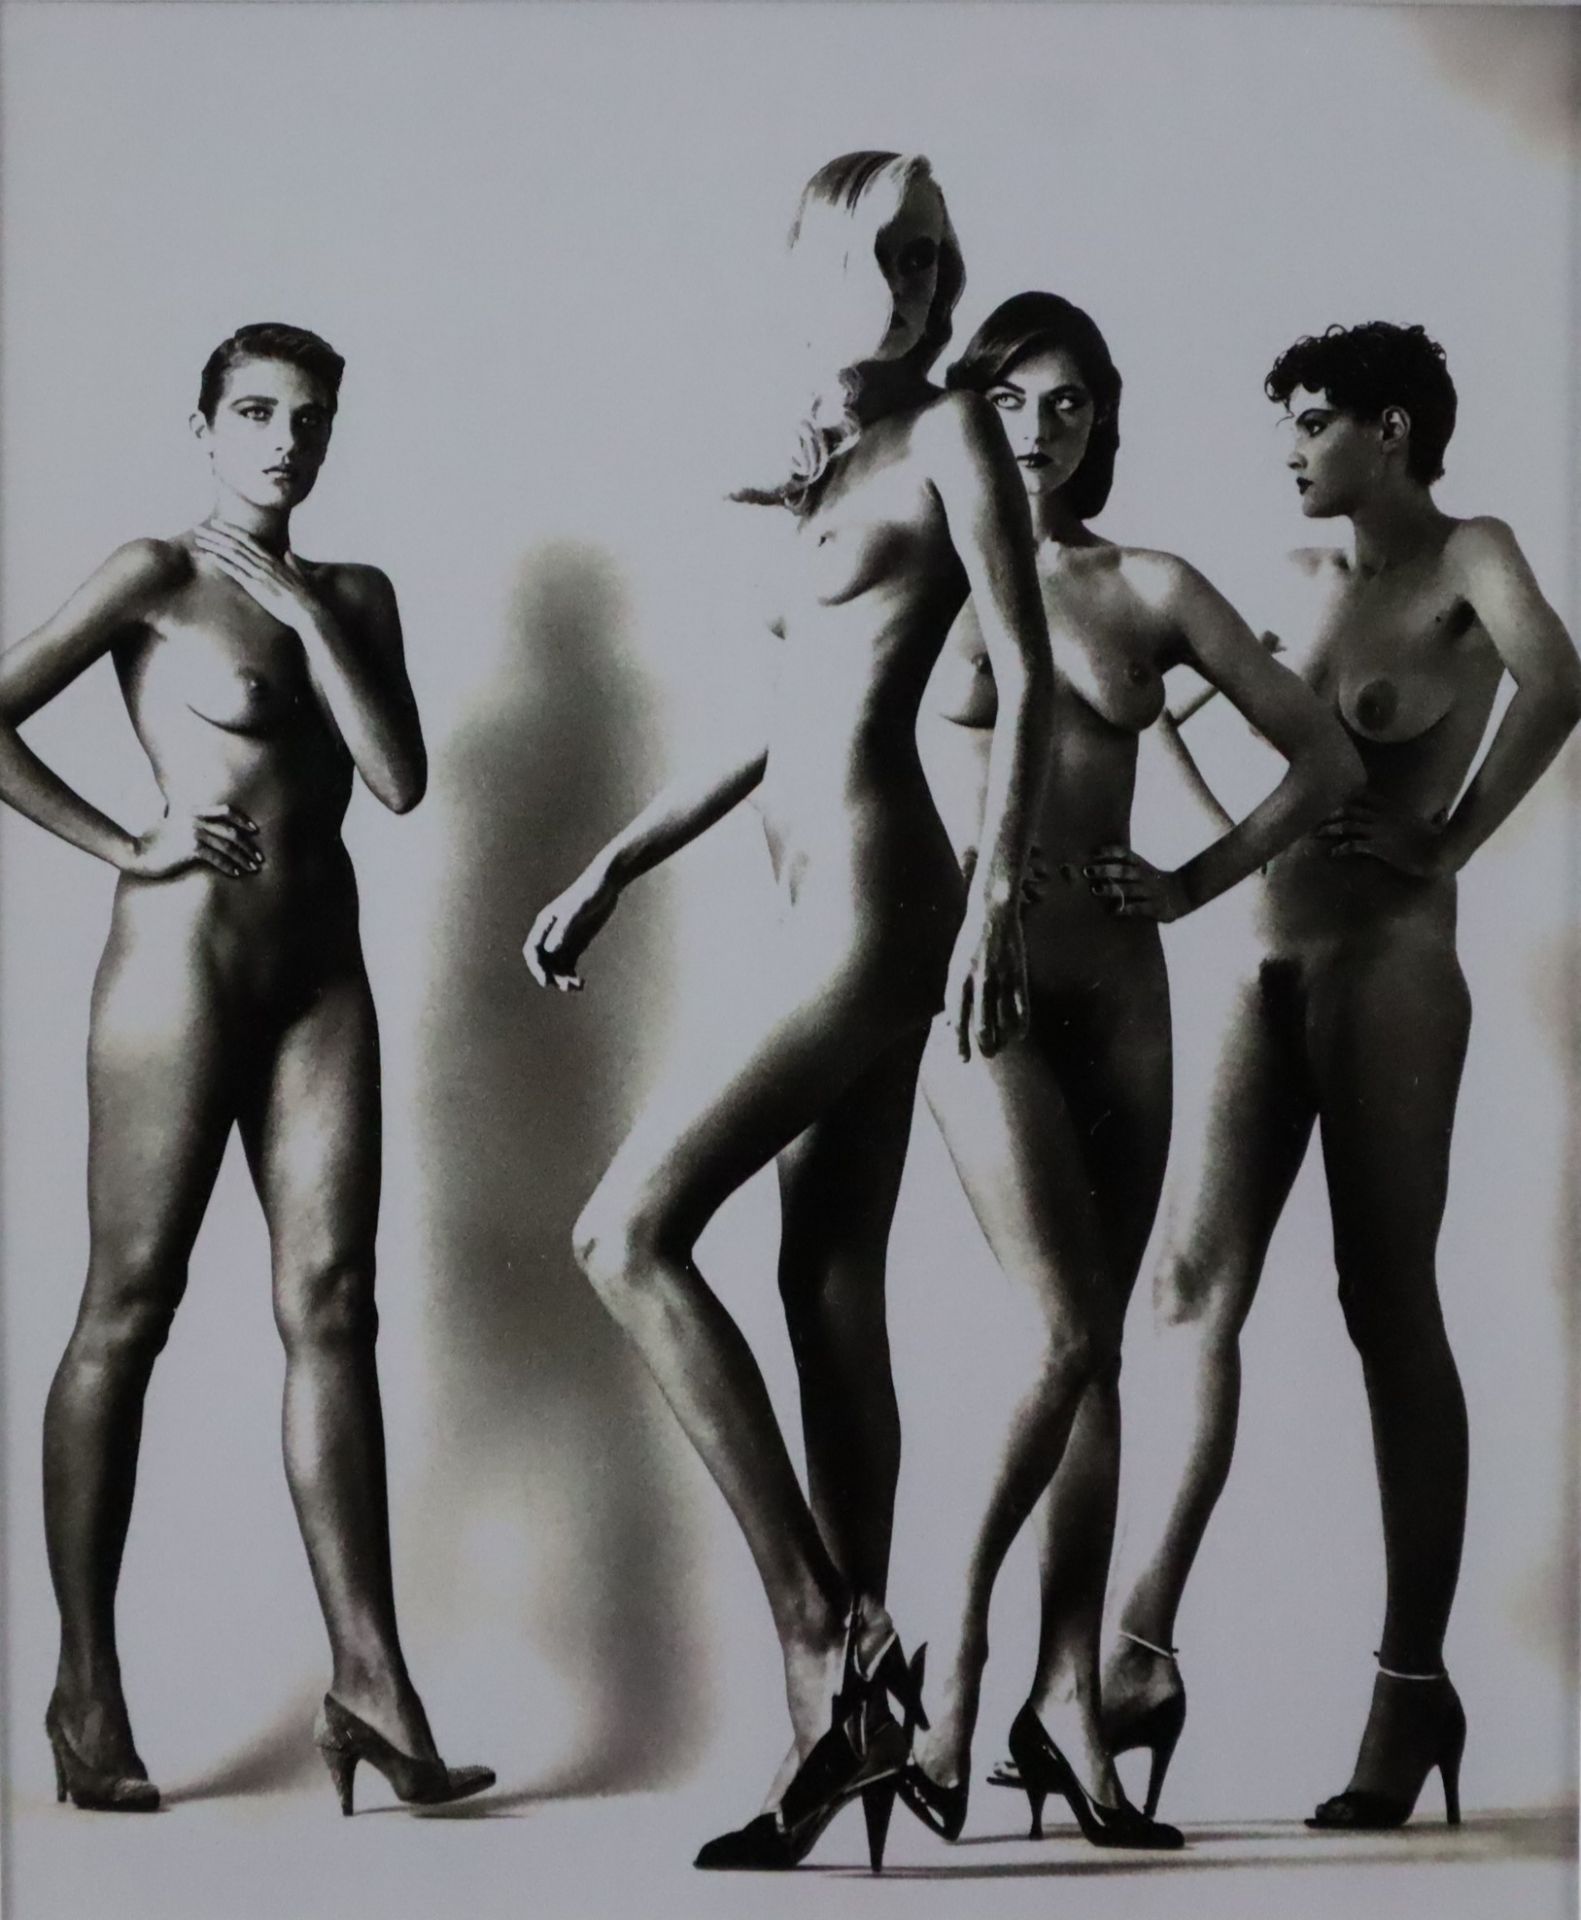 Newton, Helmut (Berlin 1920 - Los Angeles 2004) - "Walking women", Paris 1980, Offsetdruck, mit PP